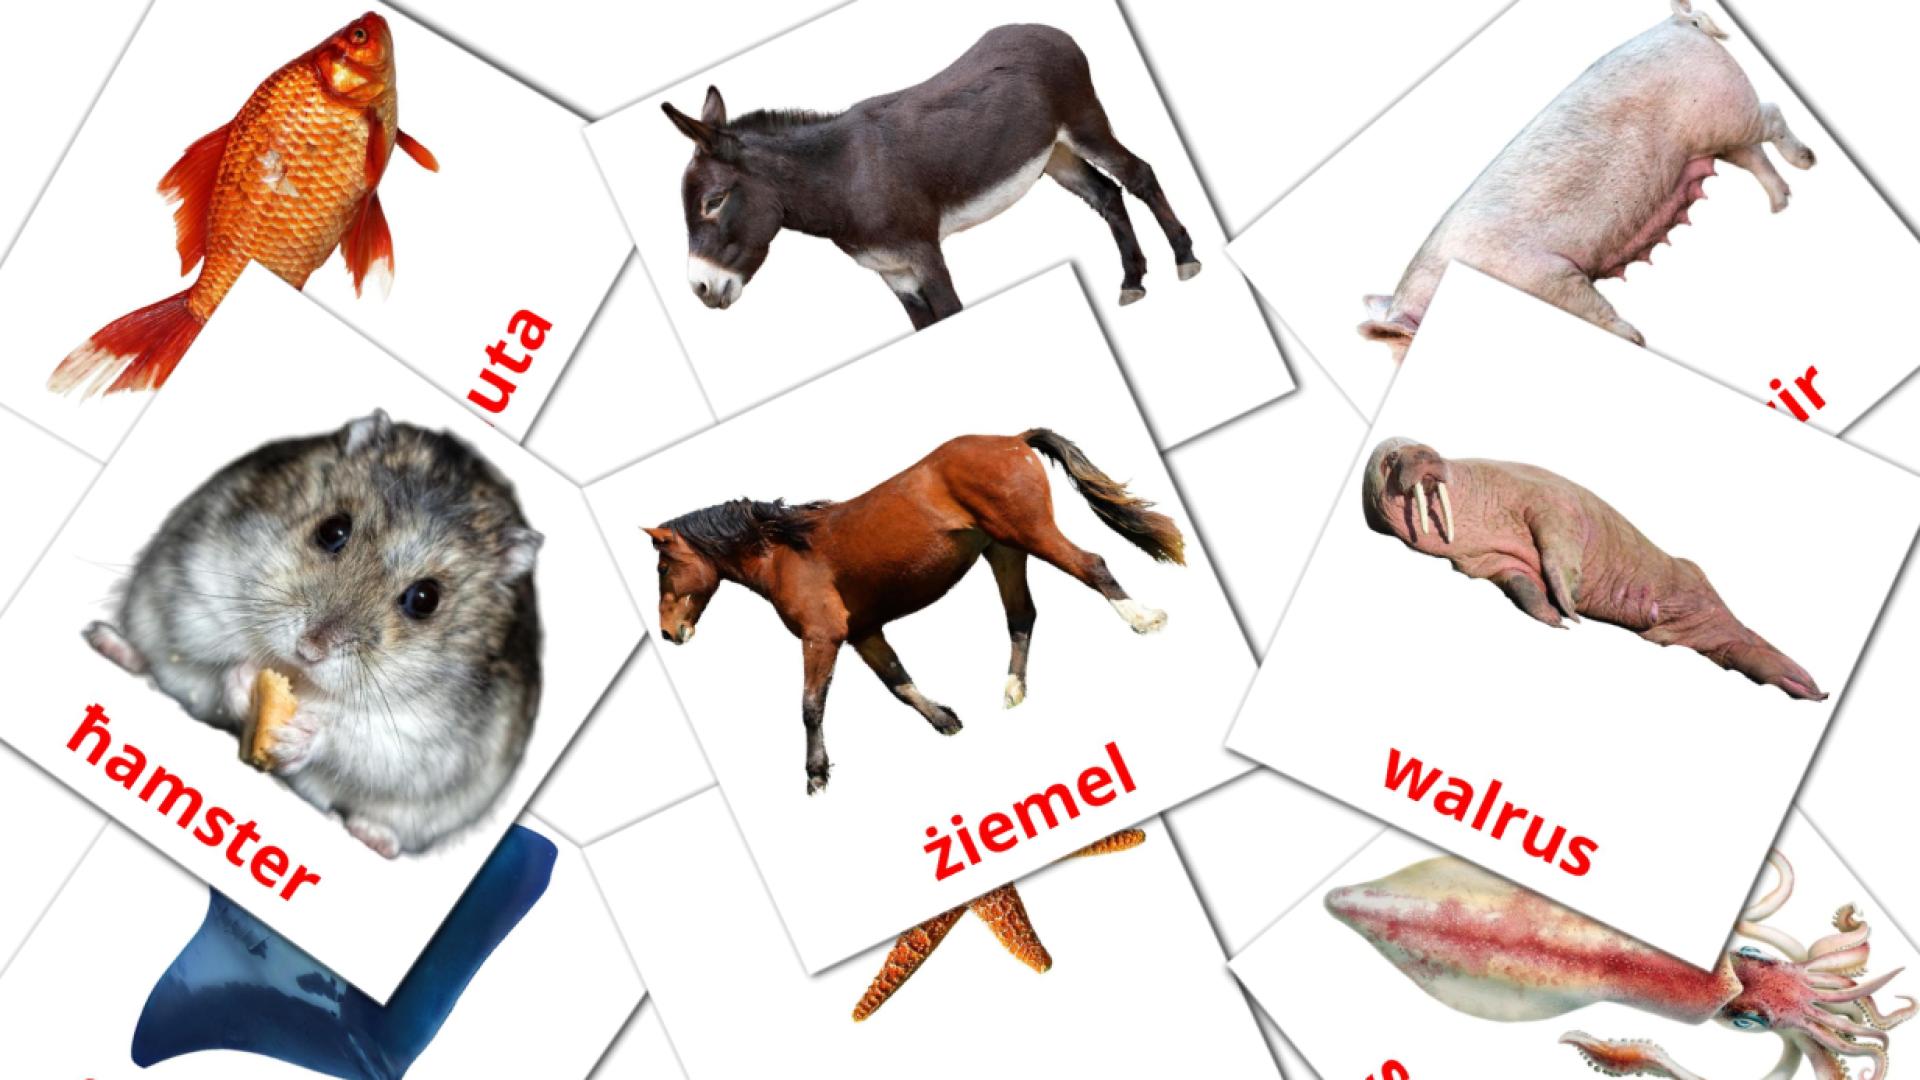 Annimali maltese vocabulary flashcards